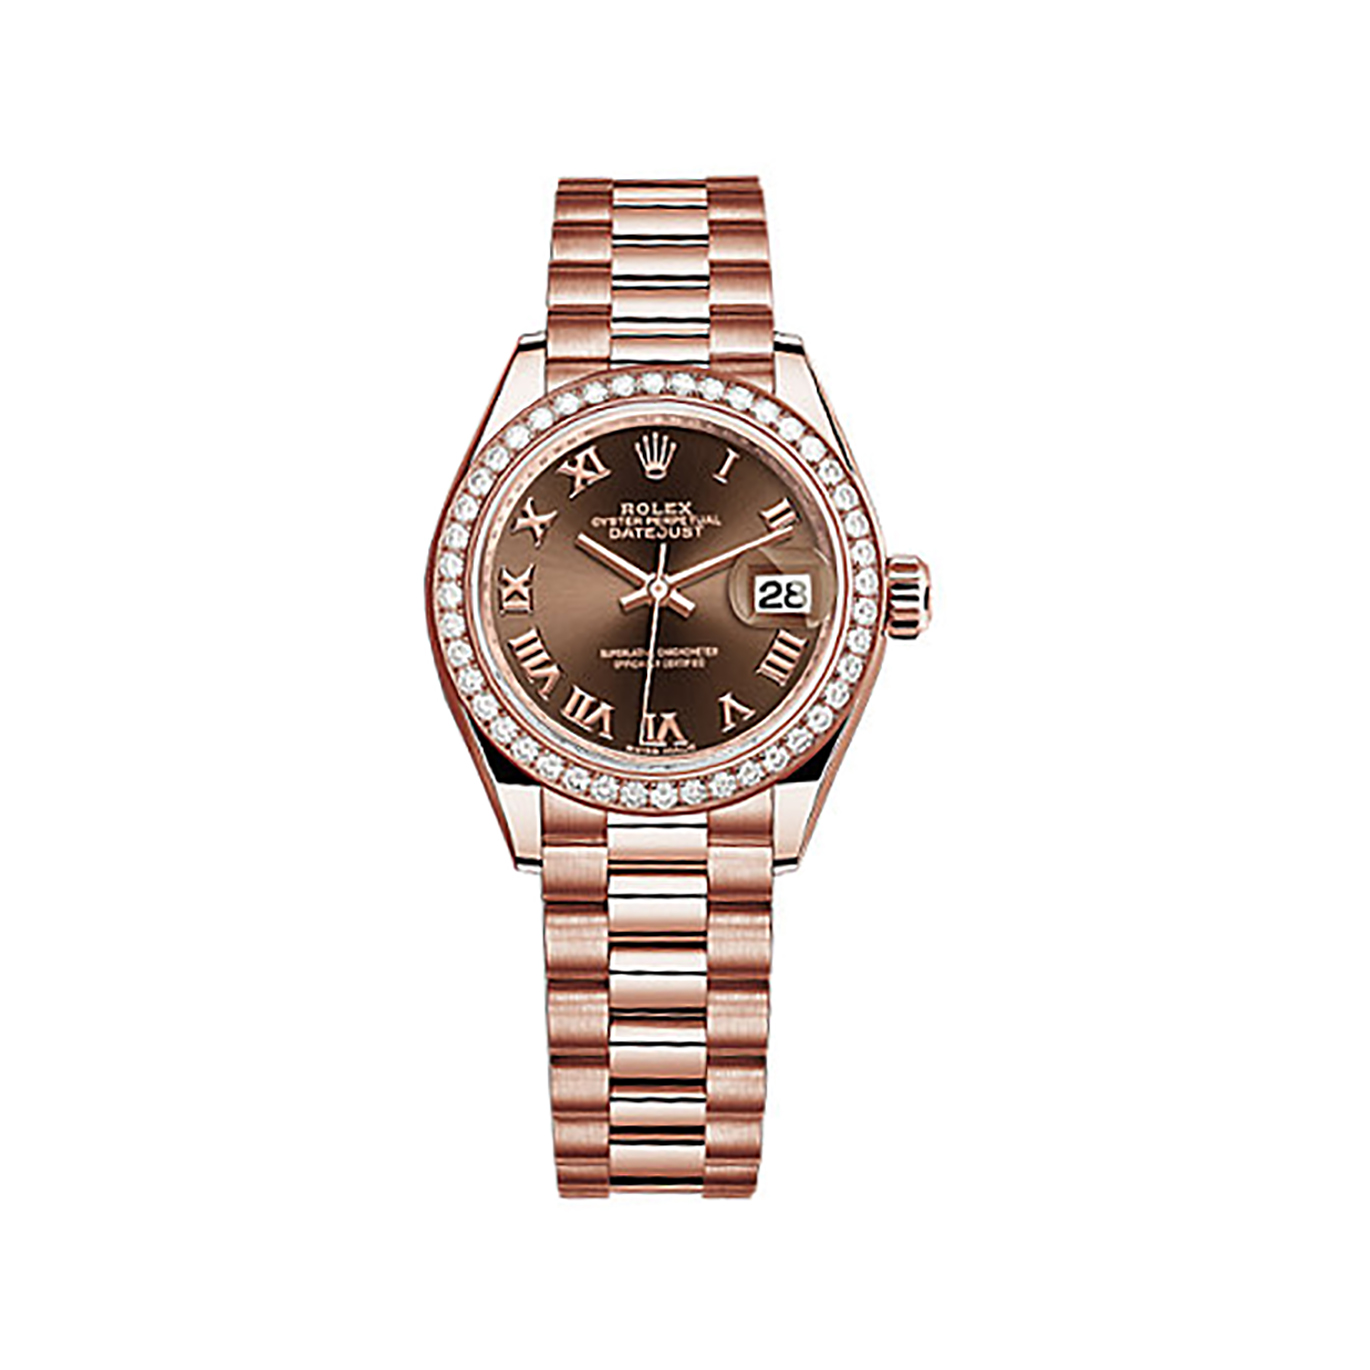 Lady-Datejust 28 279135RBR Rose Gold & Diamonds Watch (Chocolate)